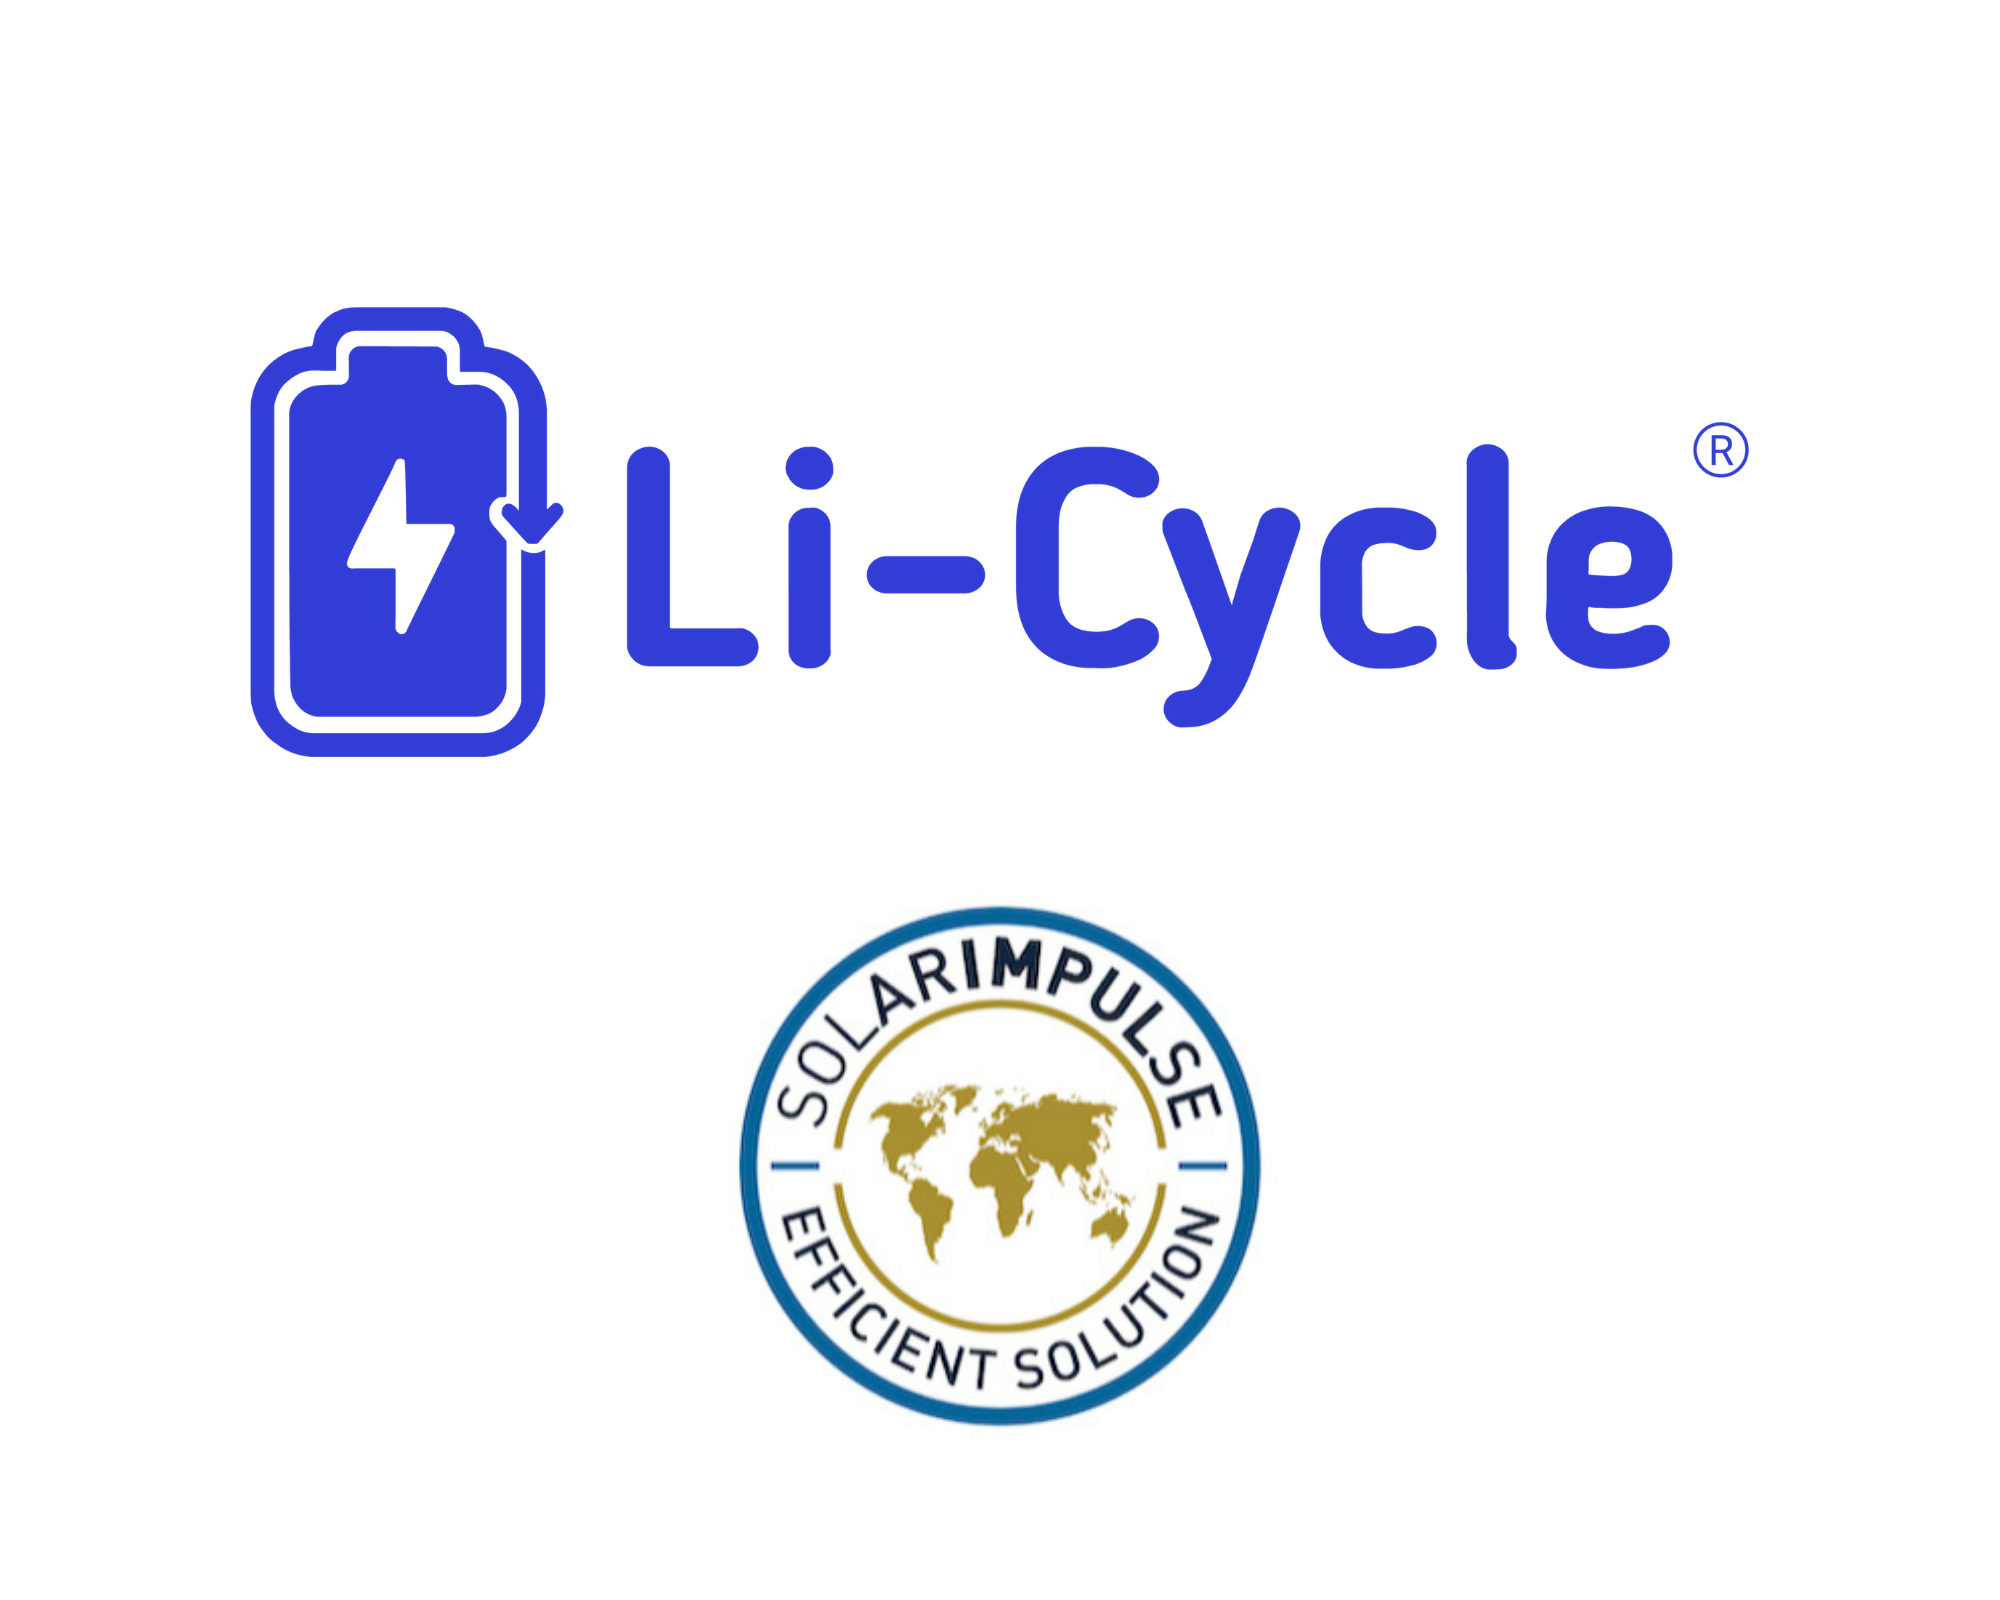 Li-Cycle logo and Solar Impulse logo